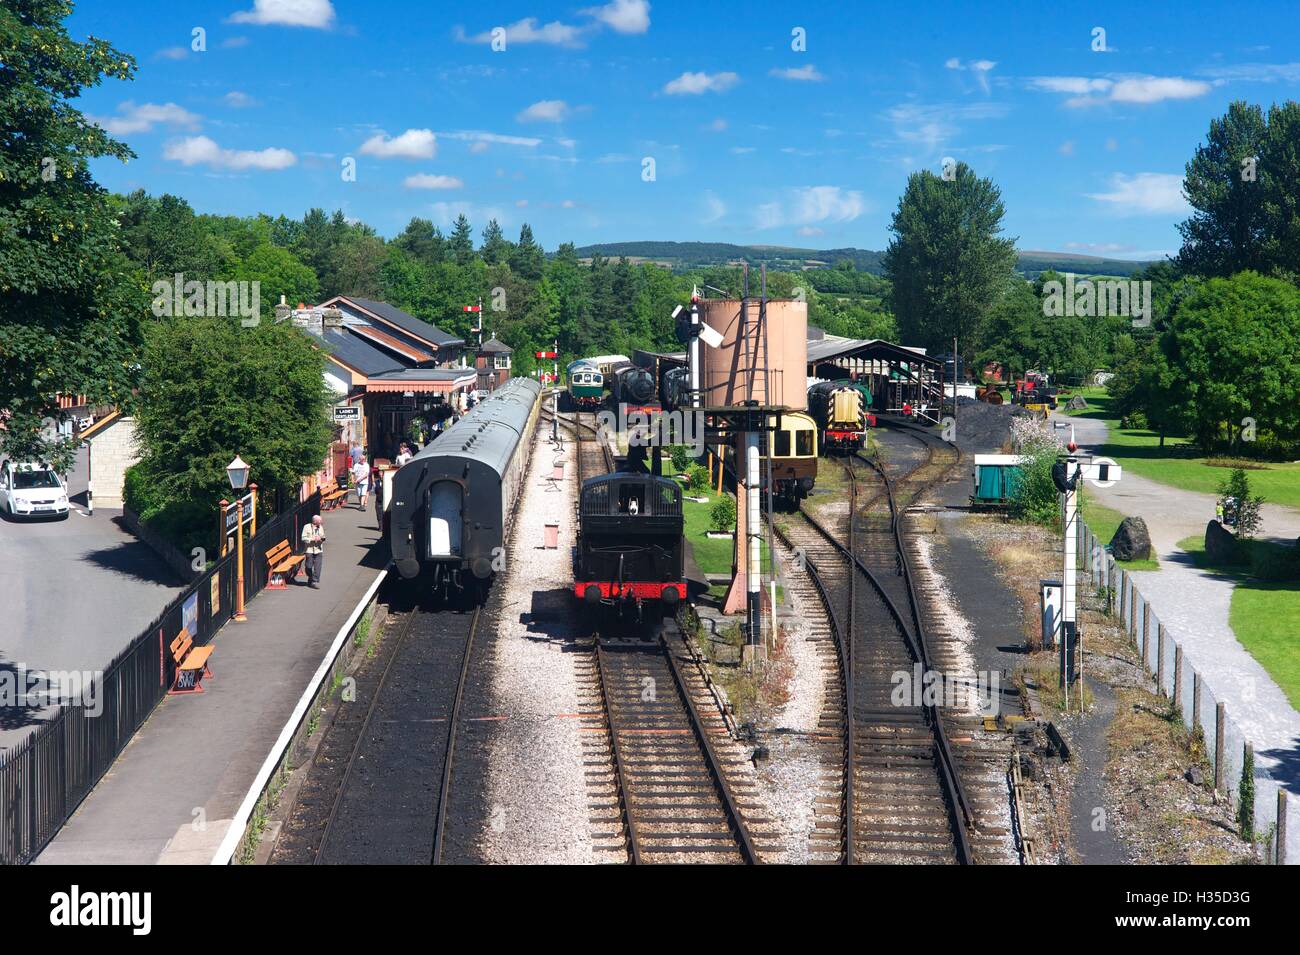 Buckfastleigh Station on the South Devon Railway, Buckfastleigh, Devon, England, United Kingdom, Europe Stock Photo